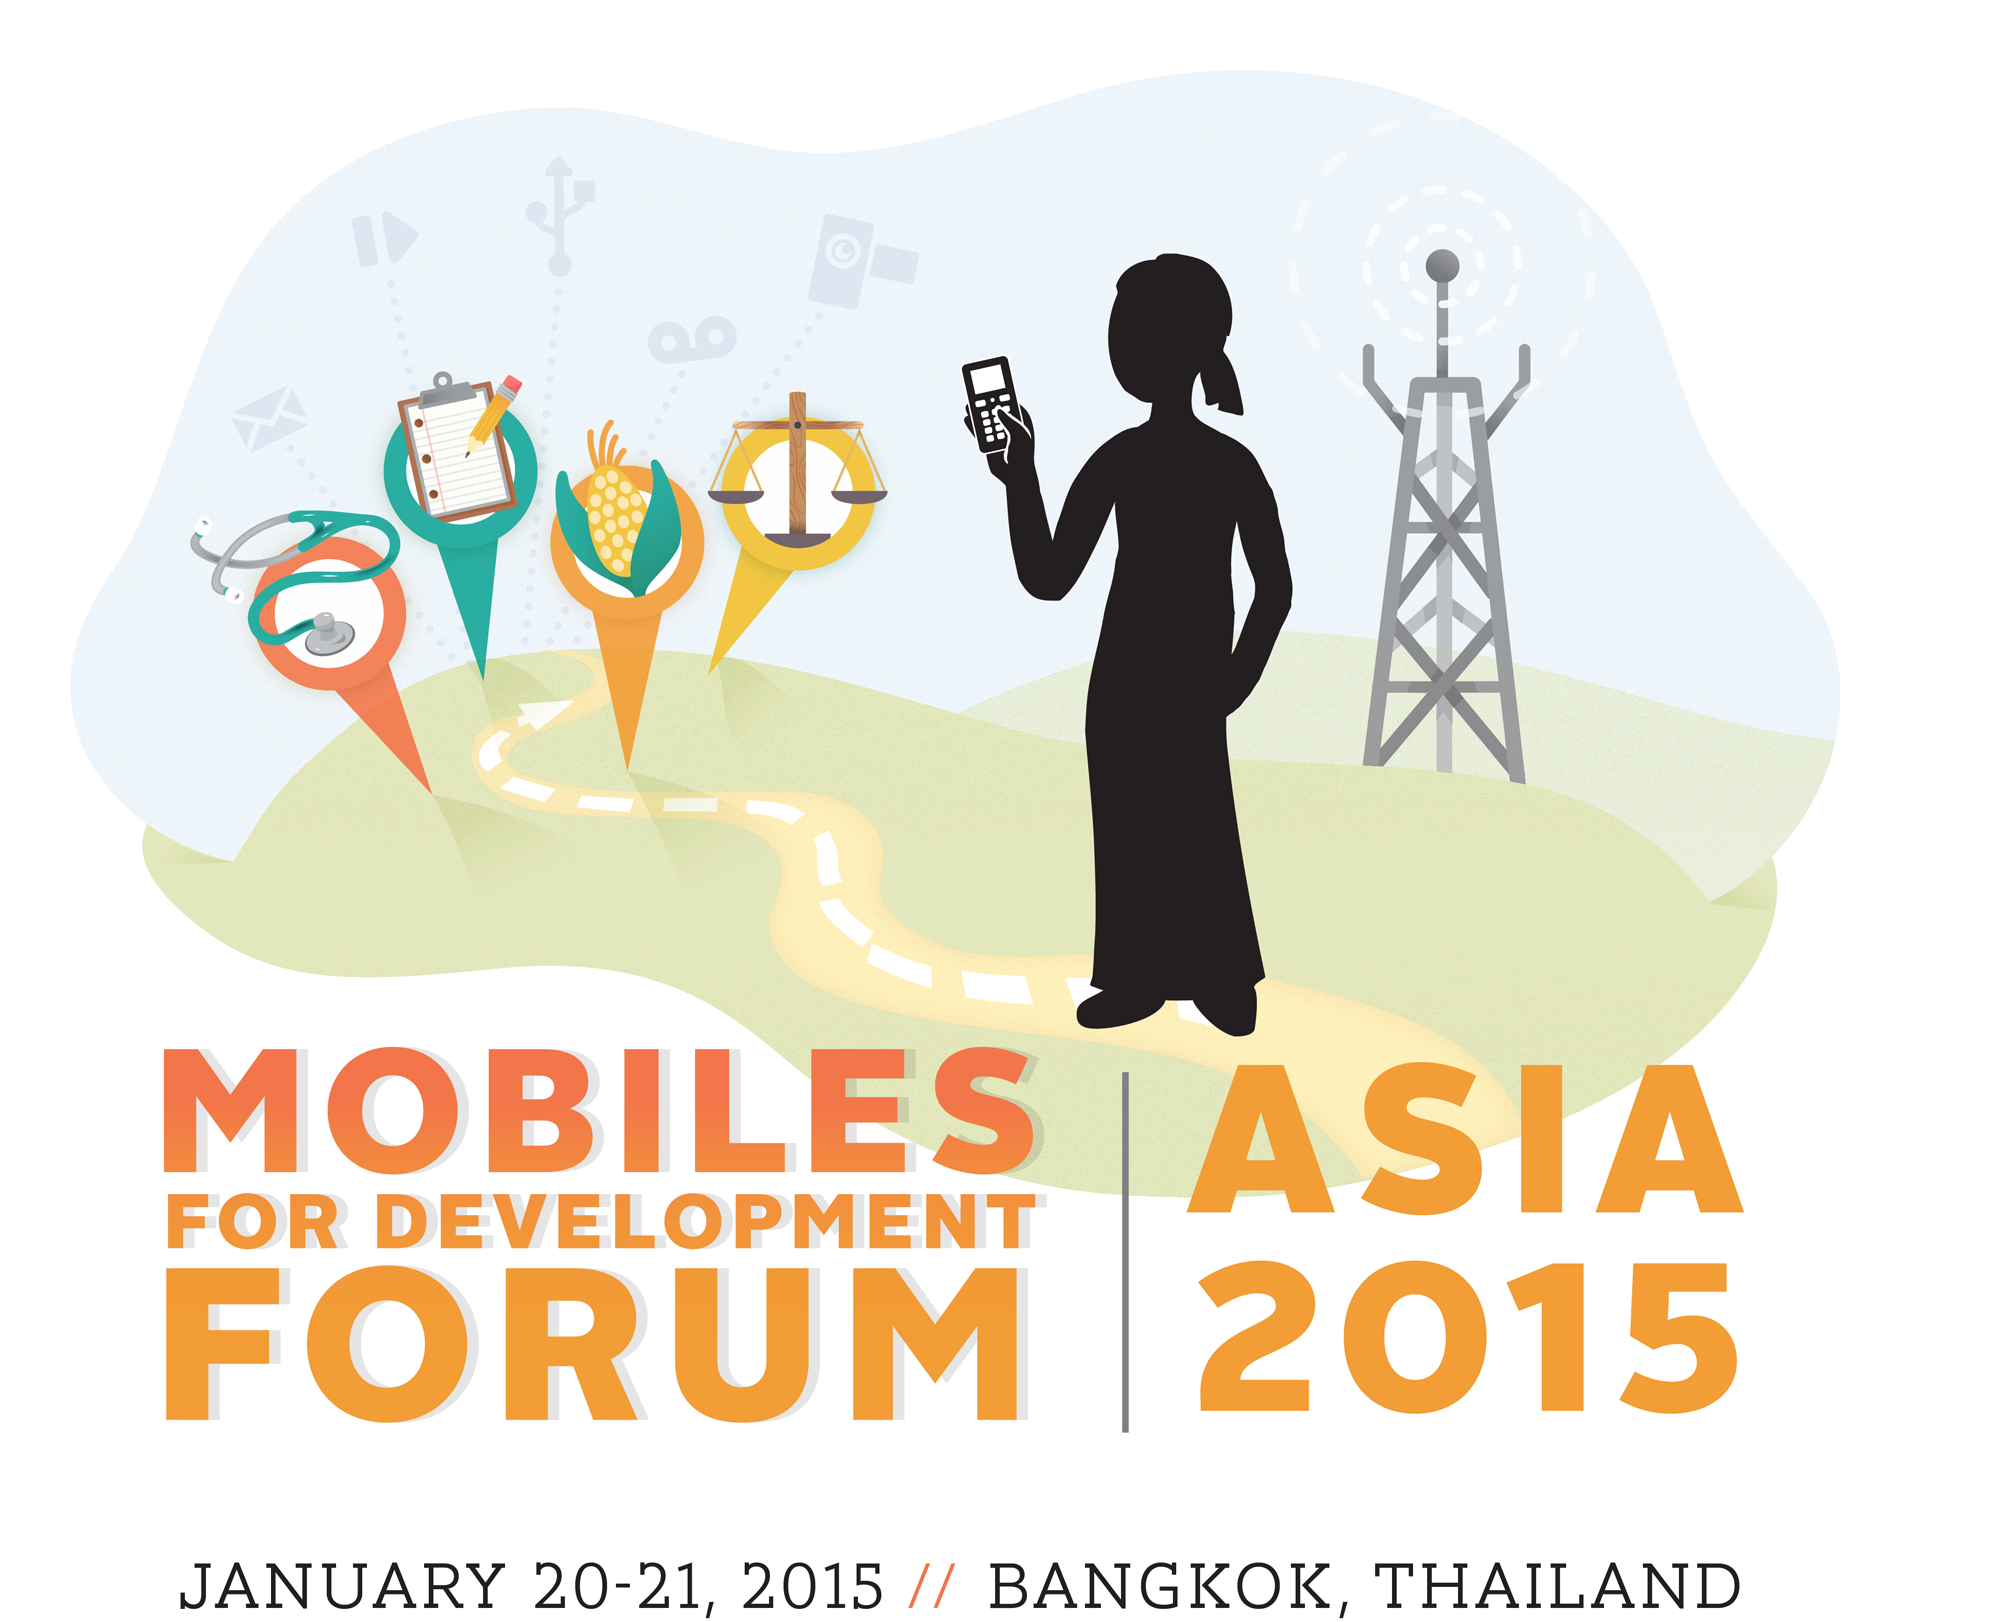 Mobiles for Development in Asia Award